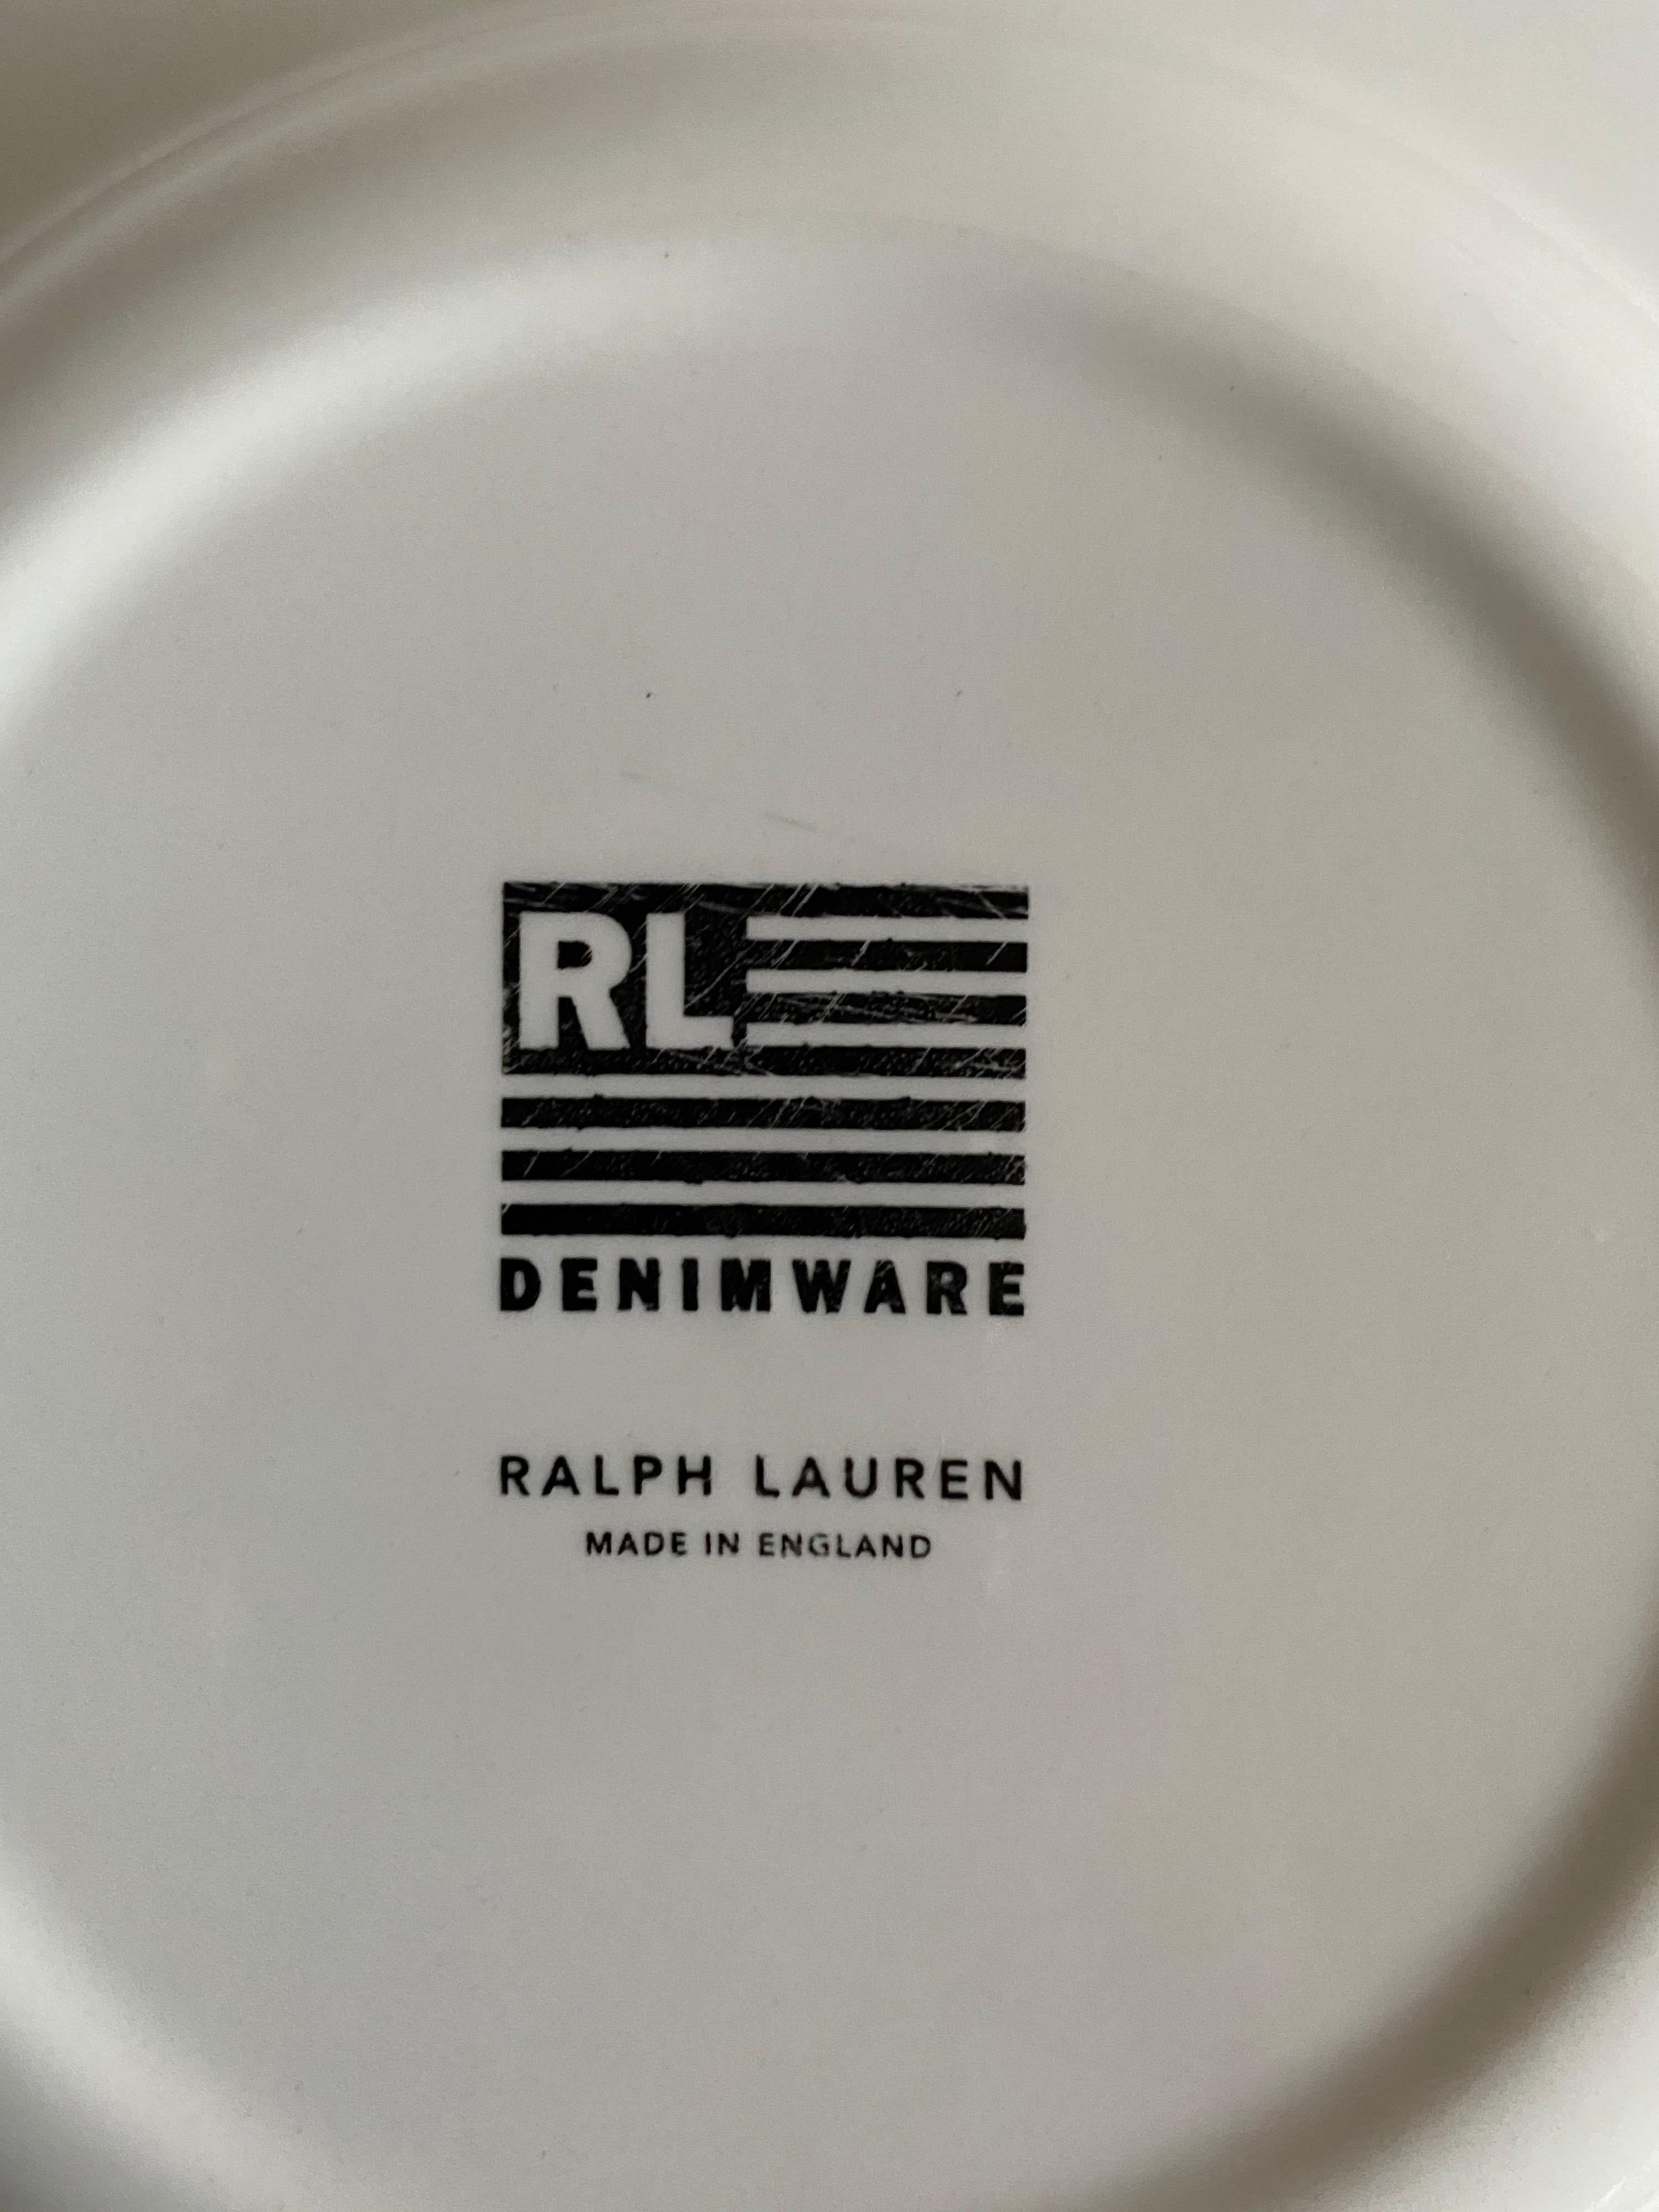 Late 20th Century Ralph Lauren RL Denimware Dinnerware Set, 4 Place Settings